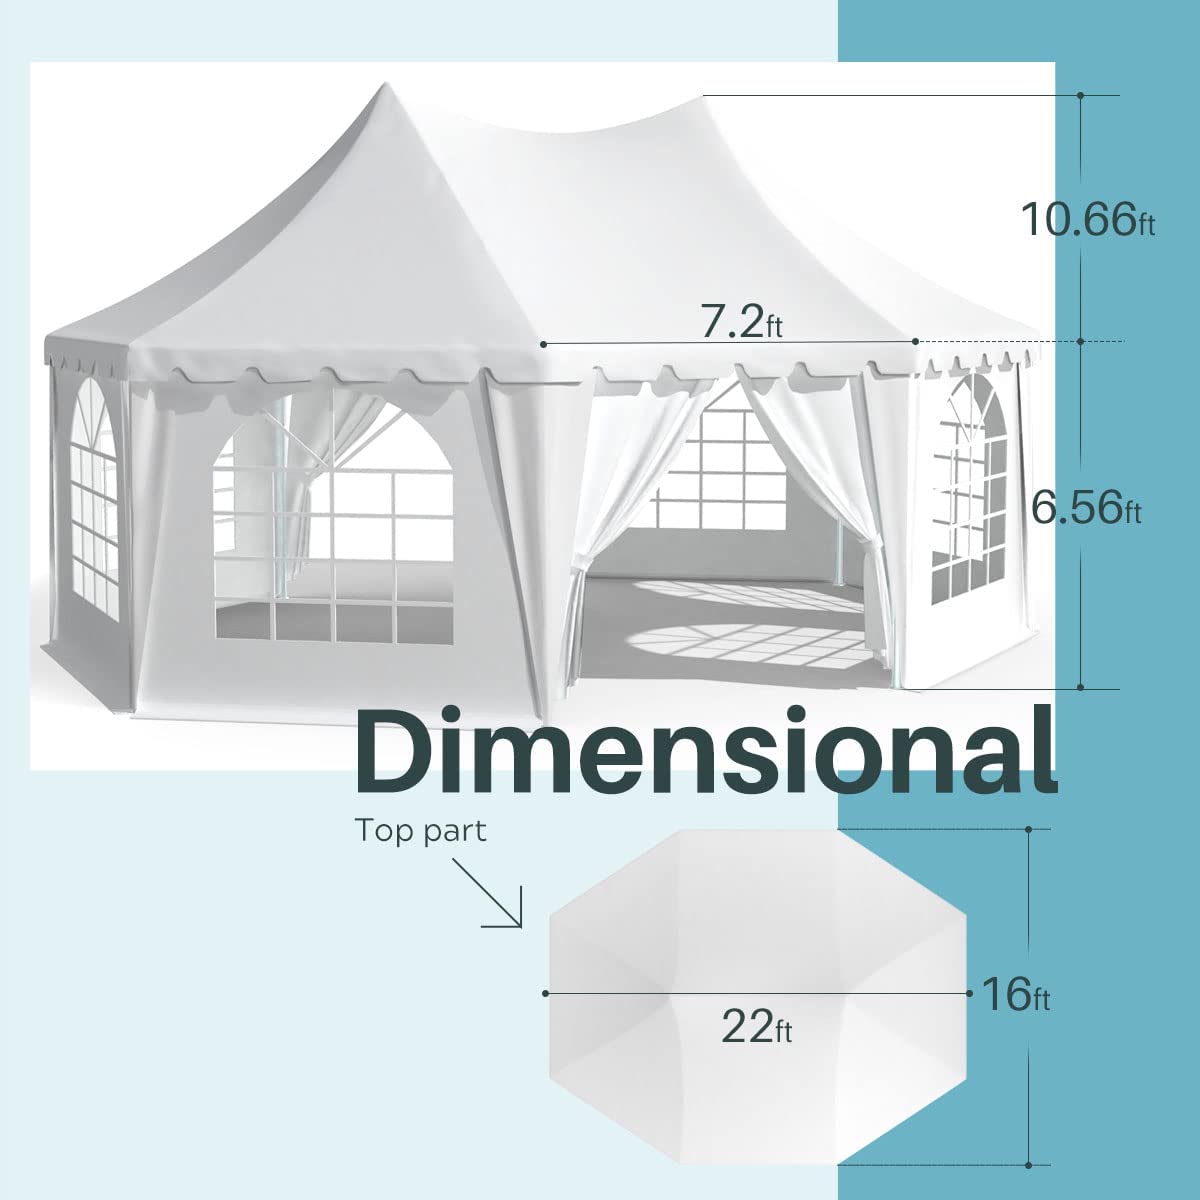 22' x 16'Party Tent dimension